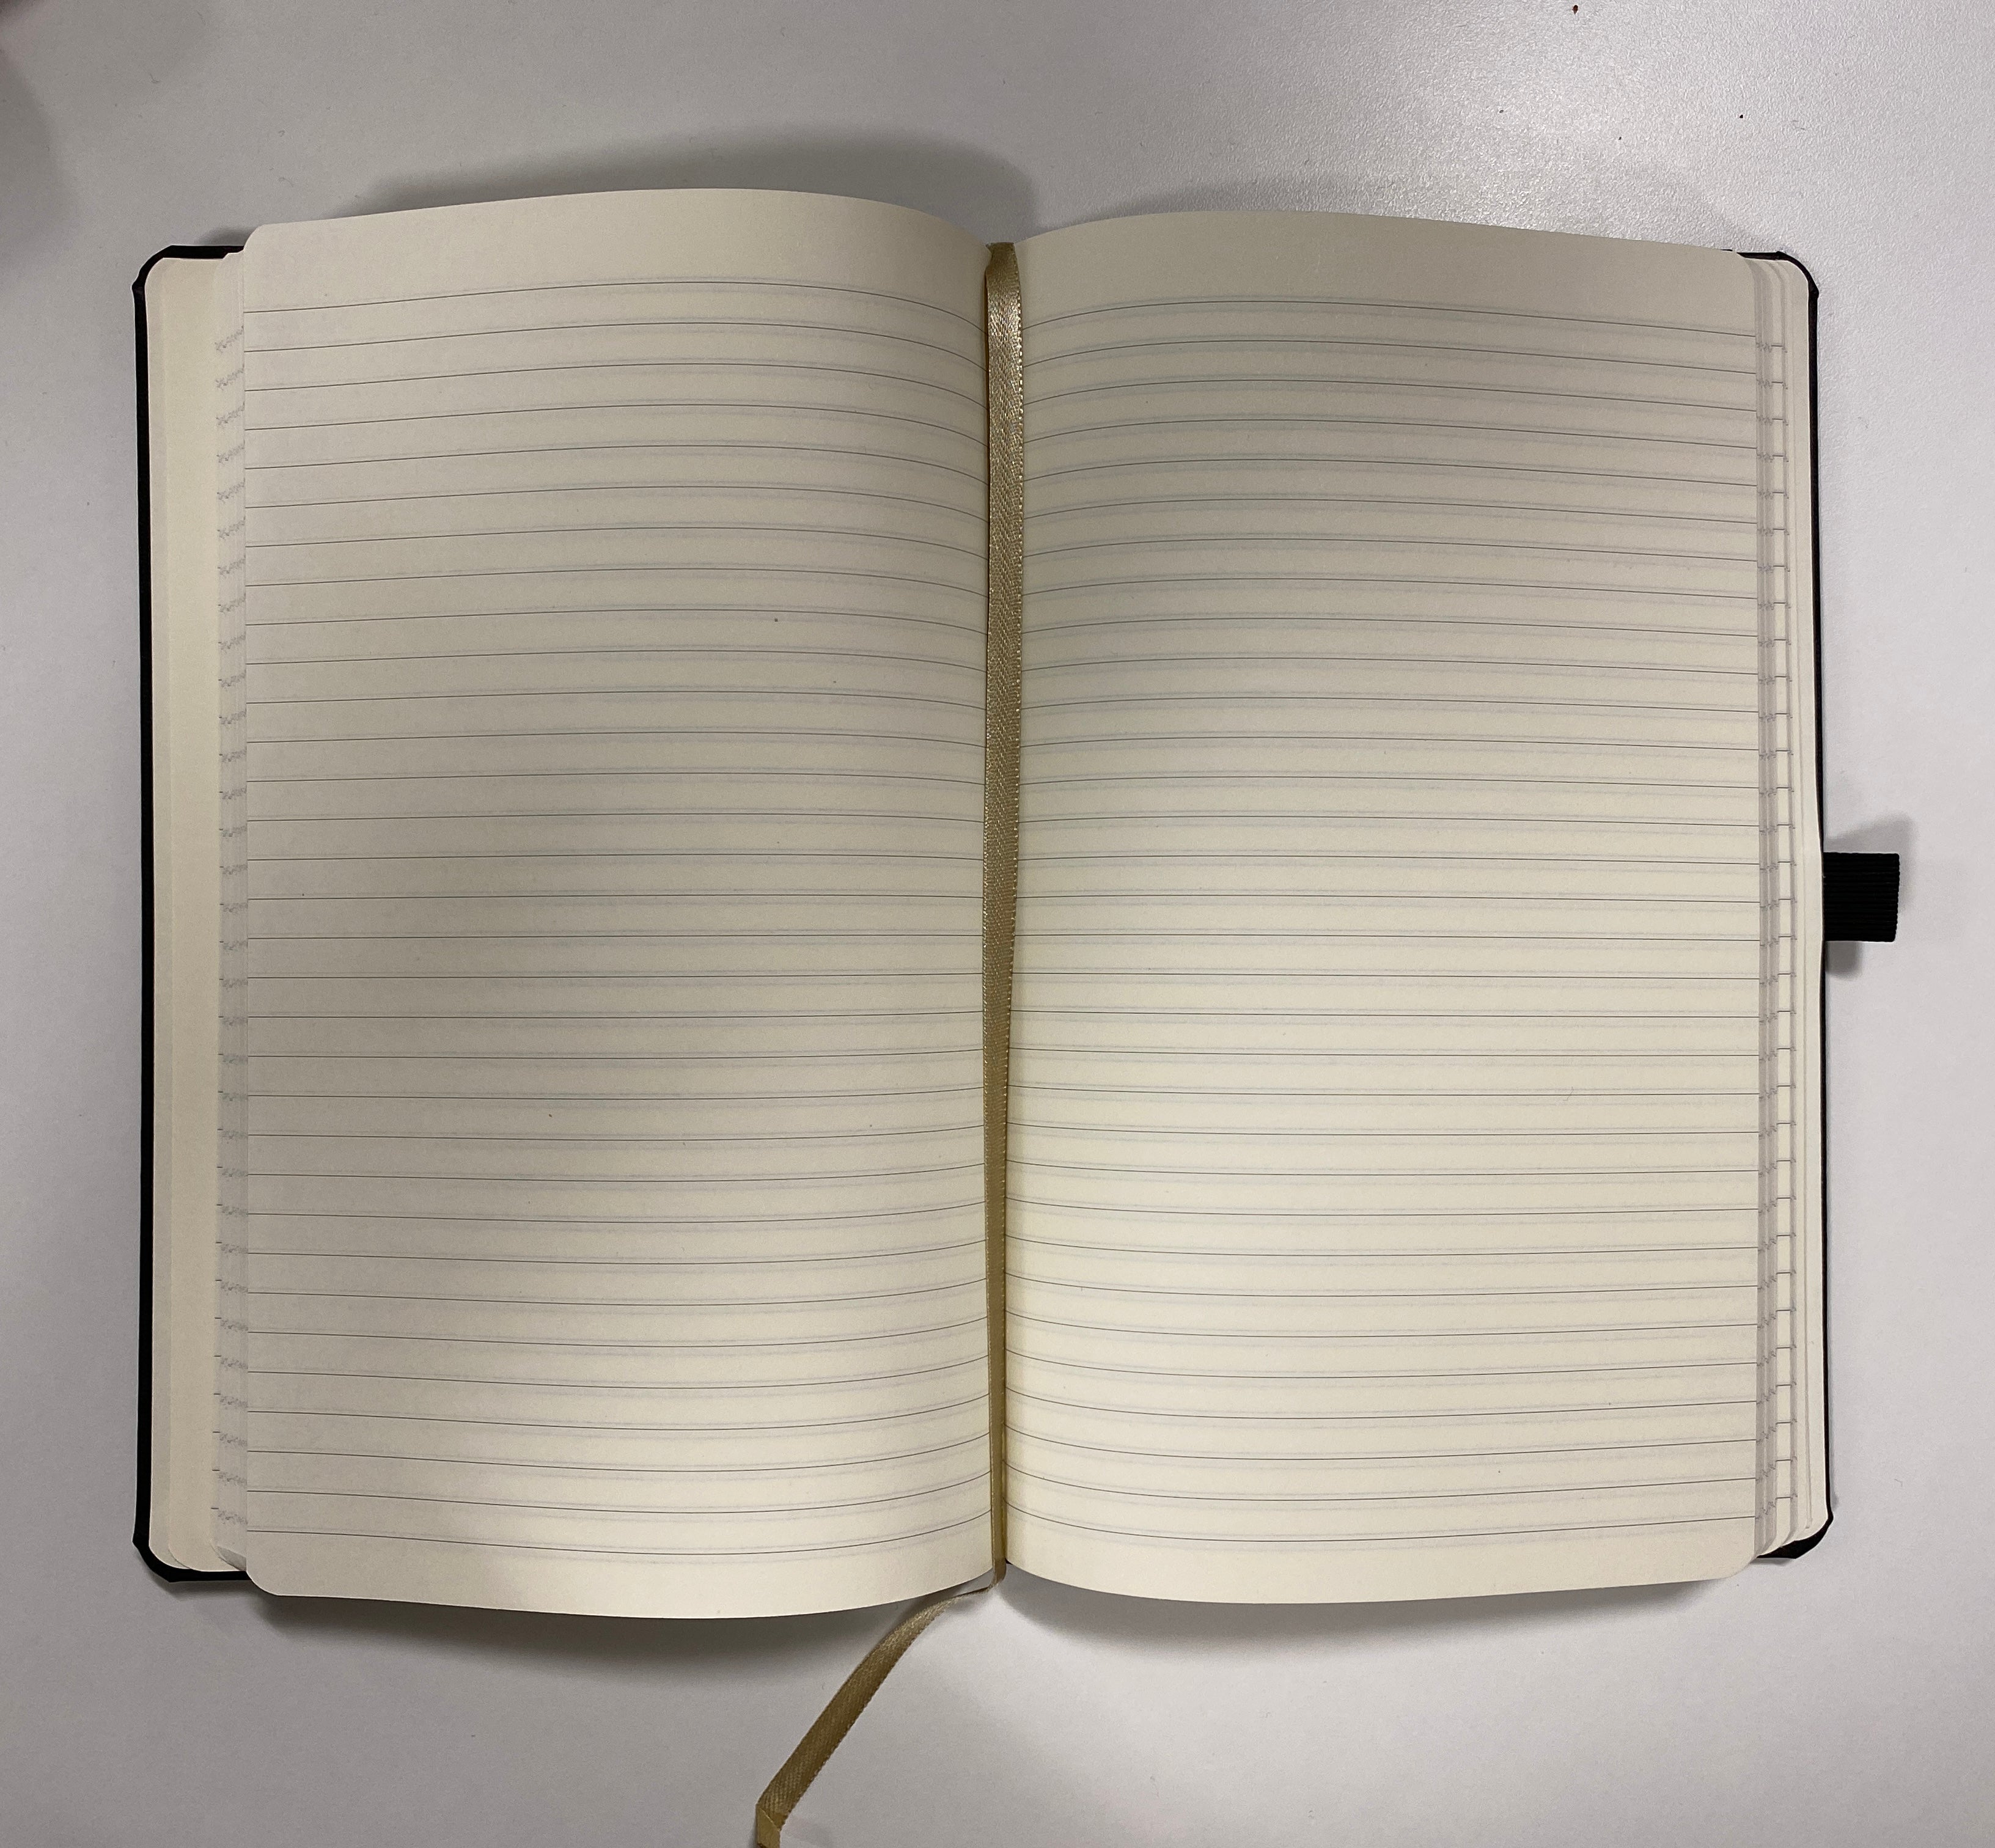 Moleskine ruled notebook A5 size – ASLEFshop